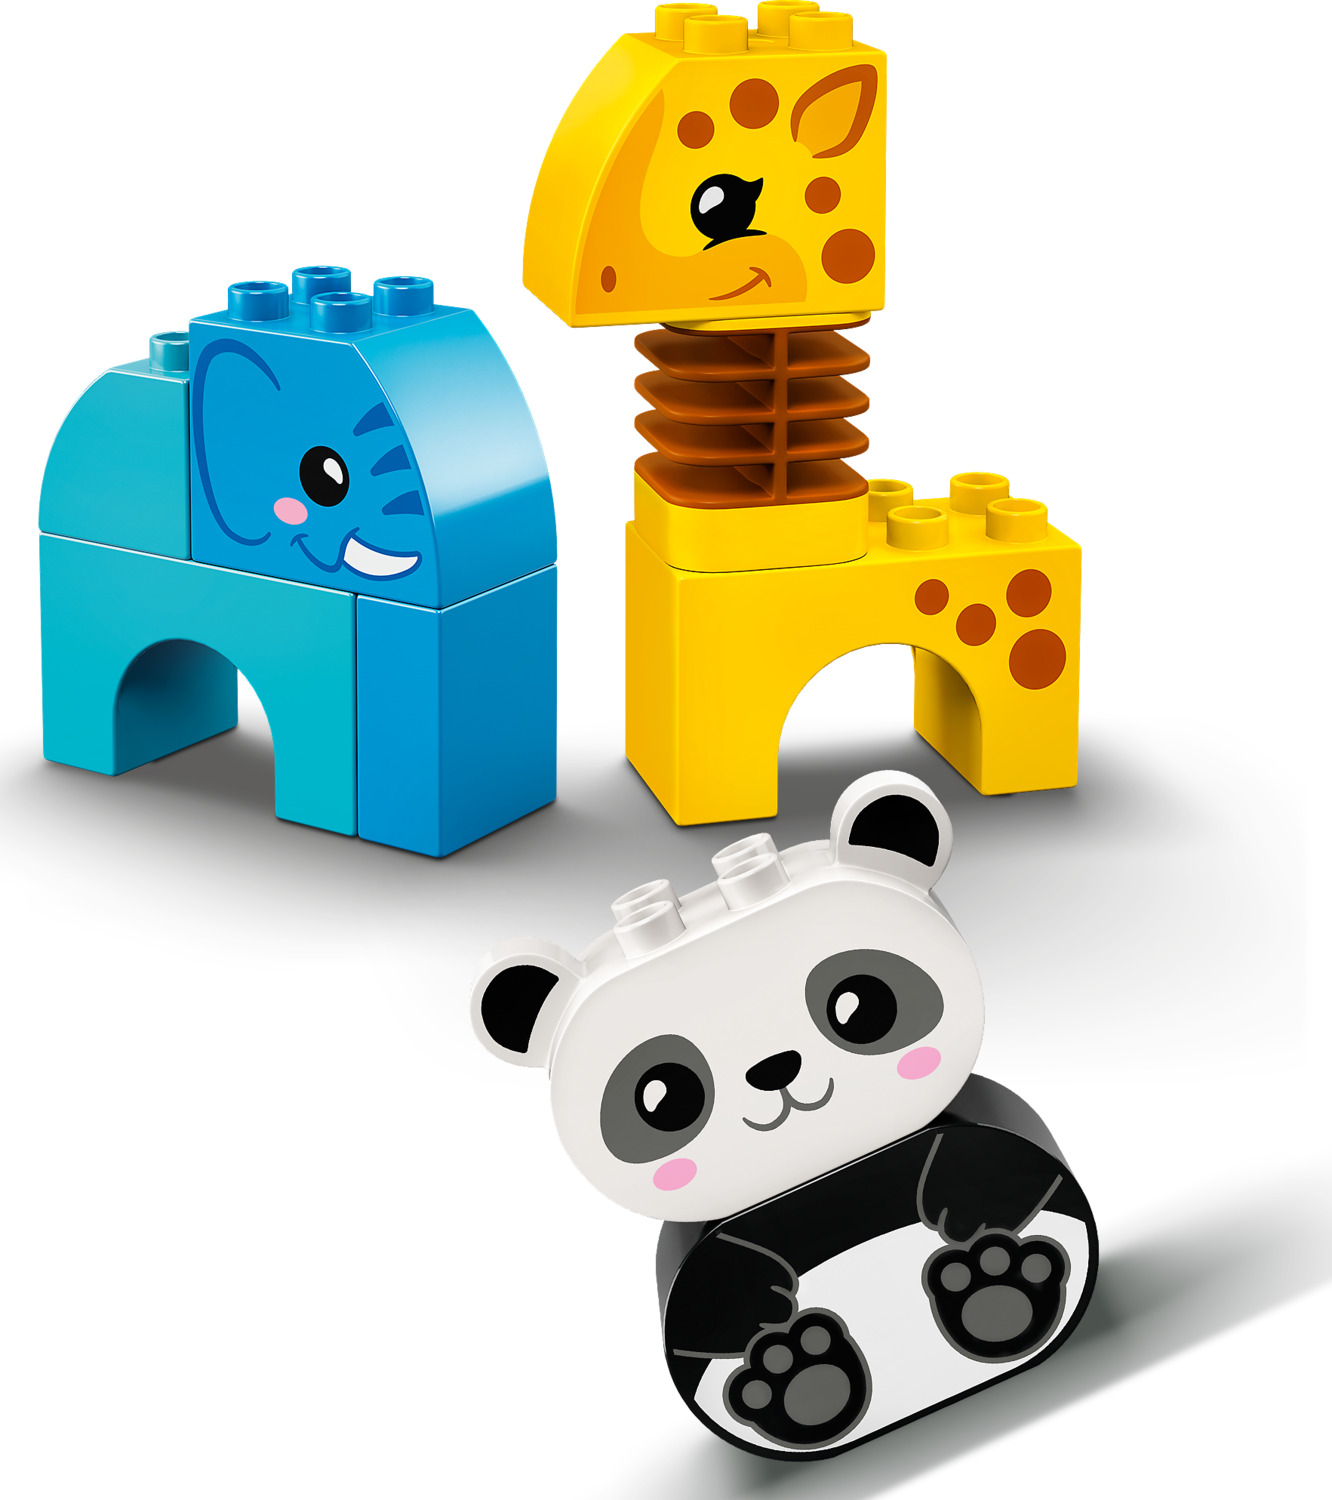 LEGO : Duplo - Le train des animaux (Animal Train)